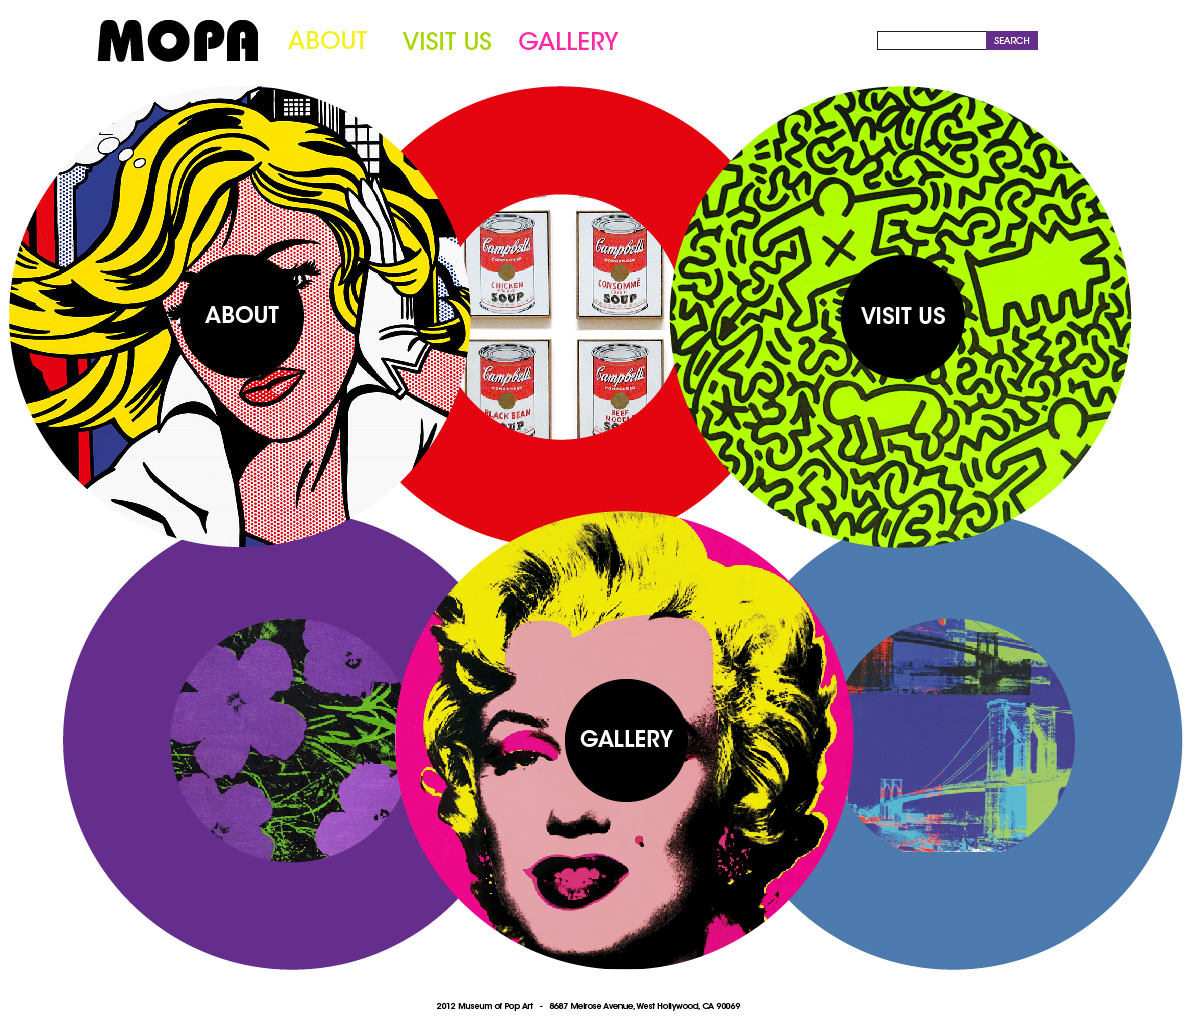 Pop Art mopa museum circles Website colorful cool Andy Warhol roy lichtenstein gallery HTML